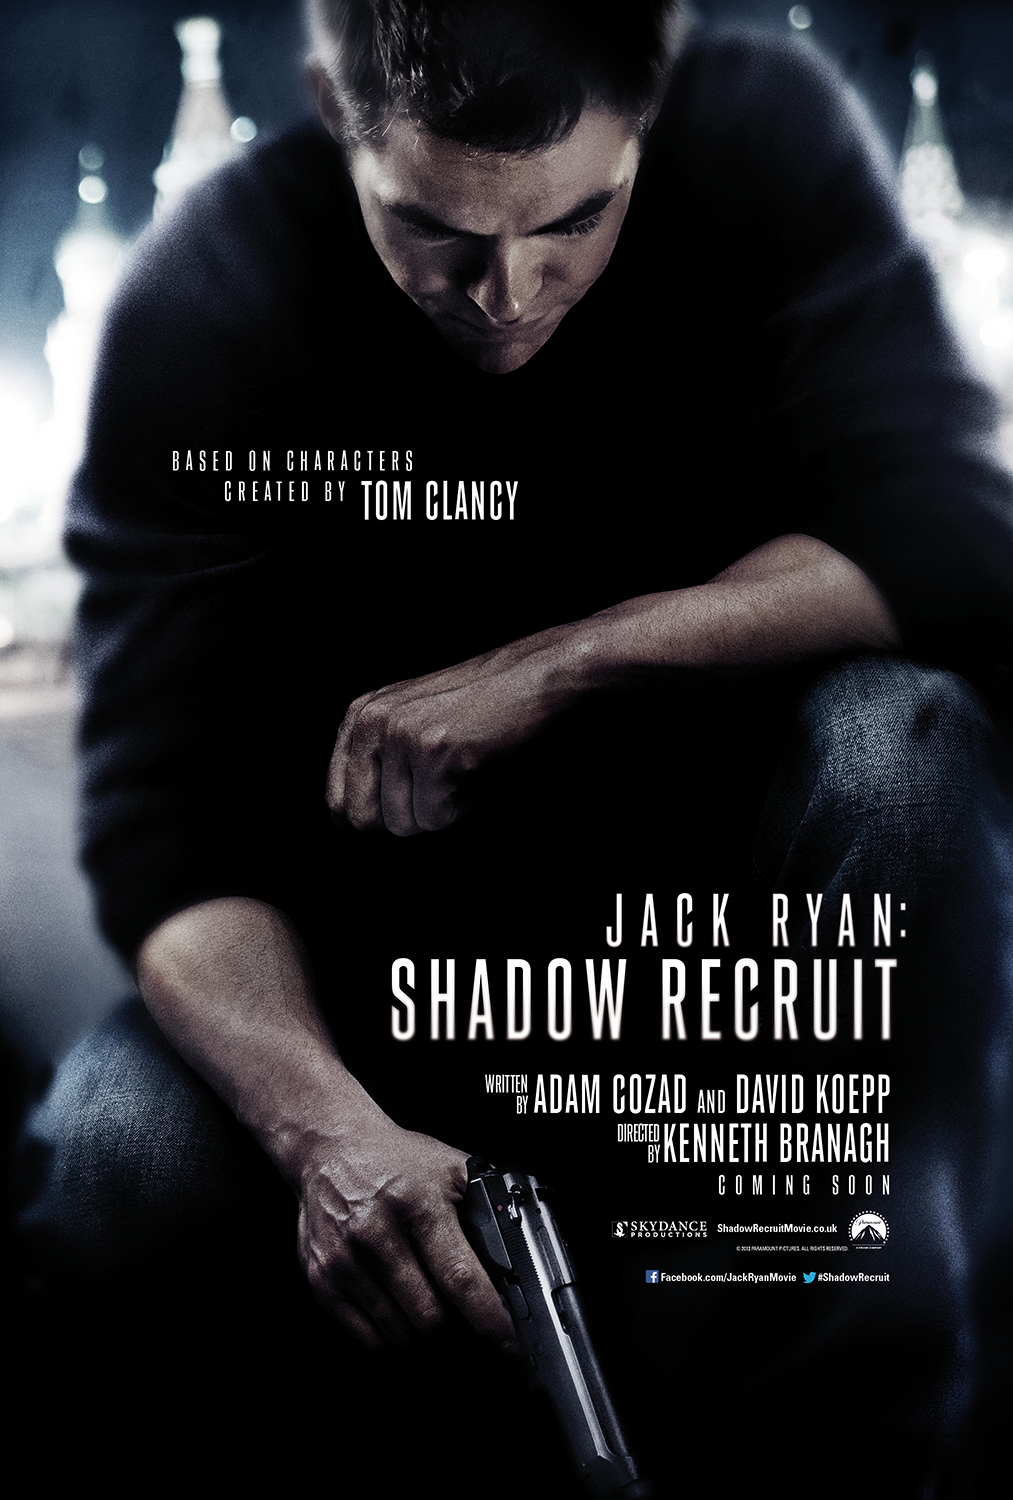 Jack Ryan: Shadow Recruit Teaser poster